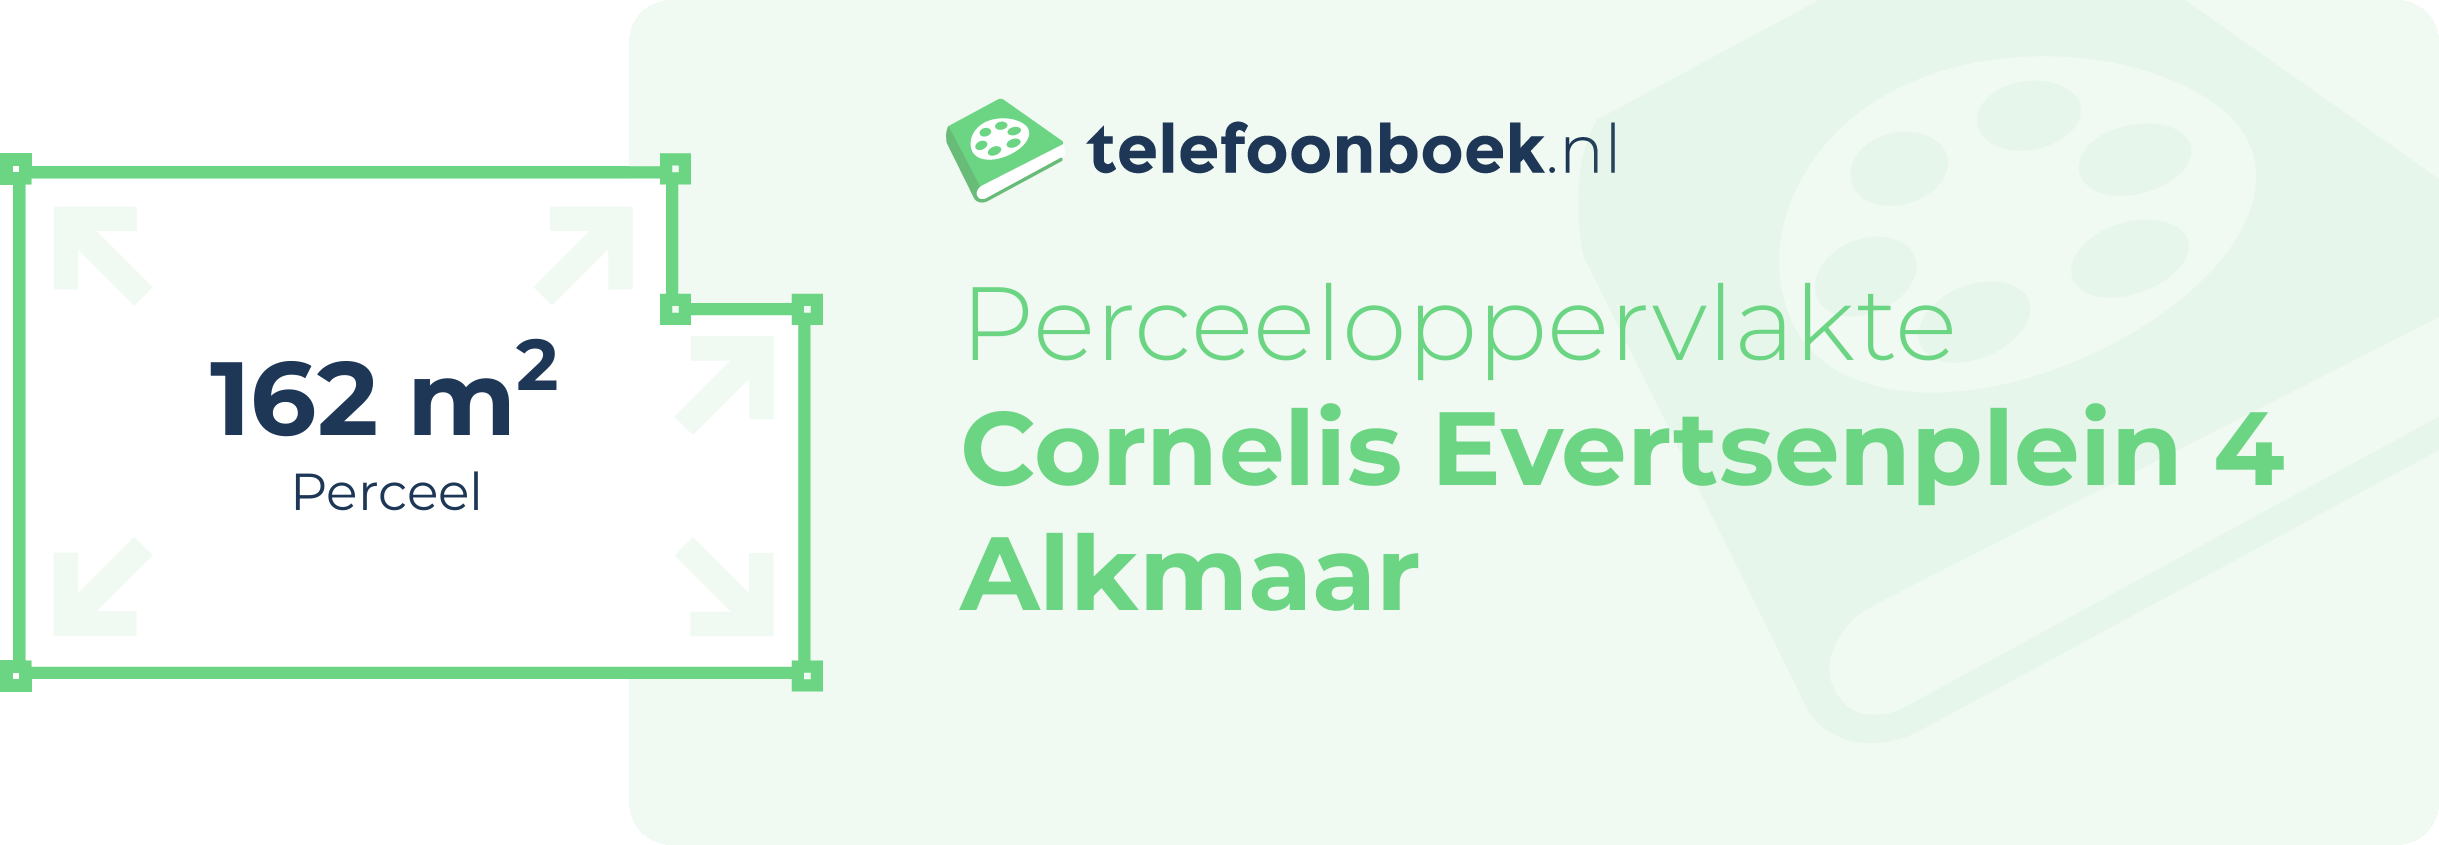 Perceeloppervlakte Cornelis Evertsenplein 4 Alkmaar